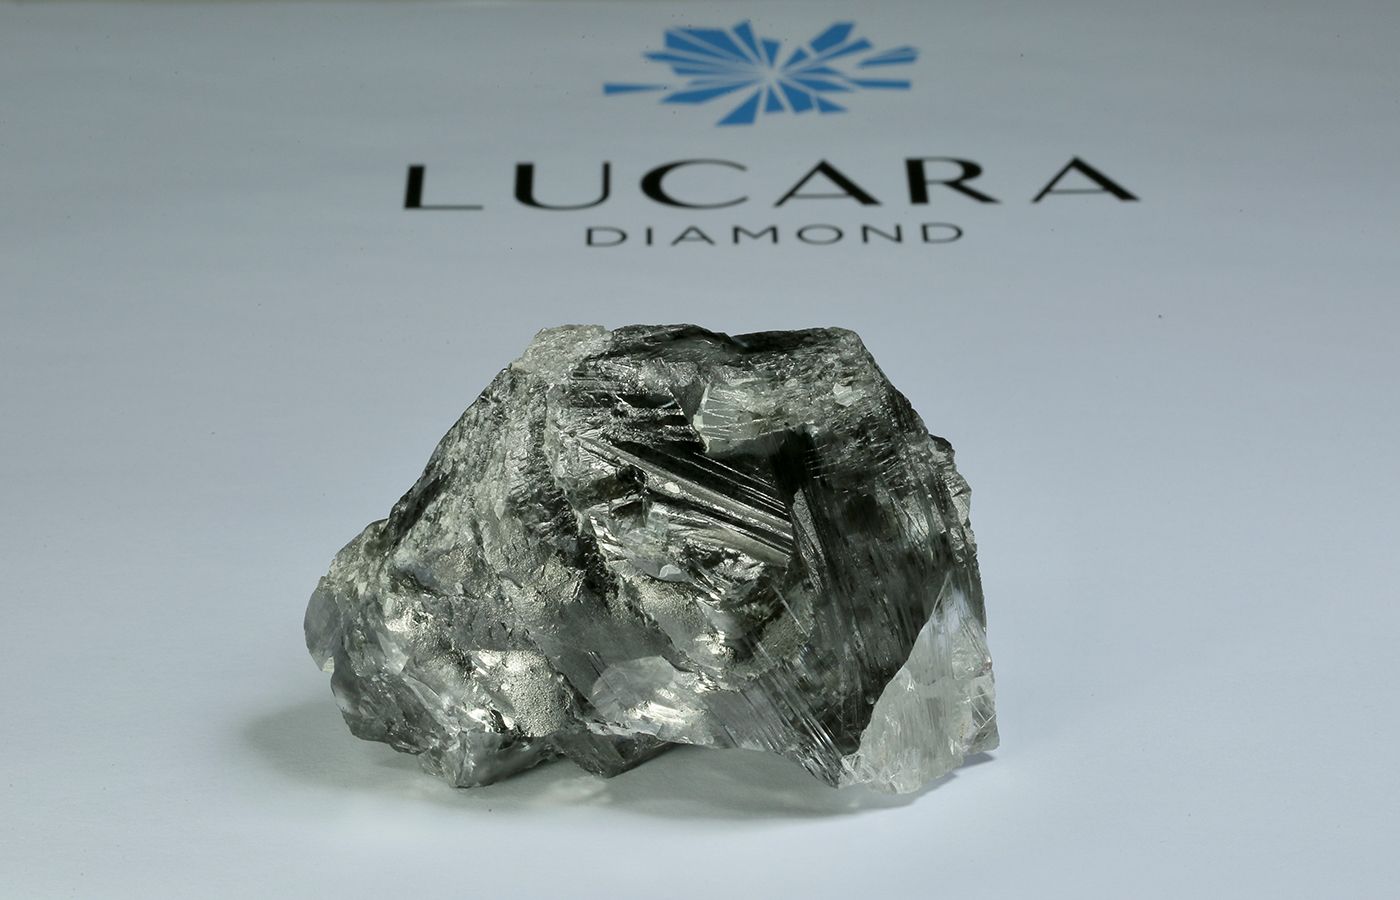 1,174-carat diamond from Karowe, Botswana